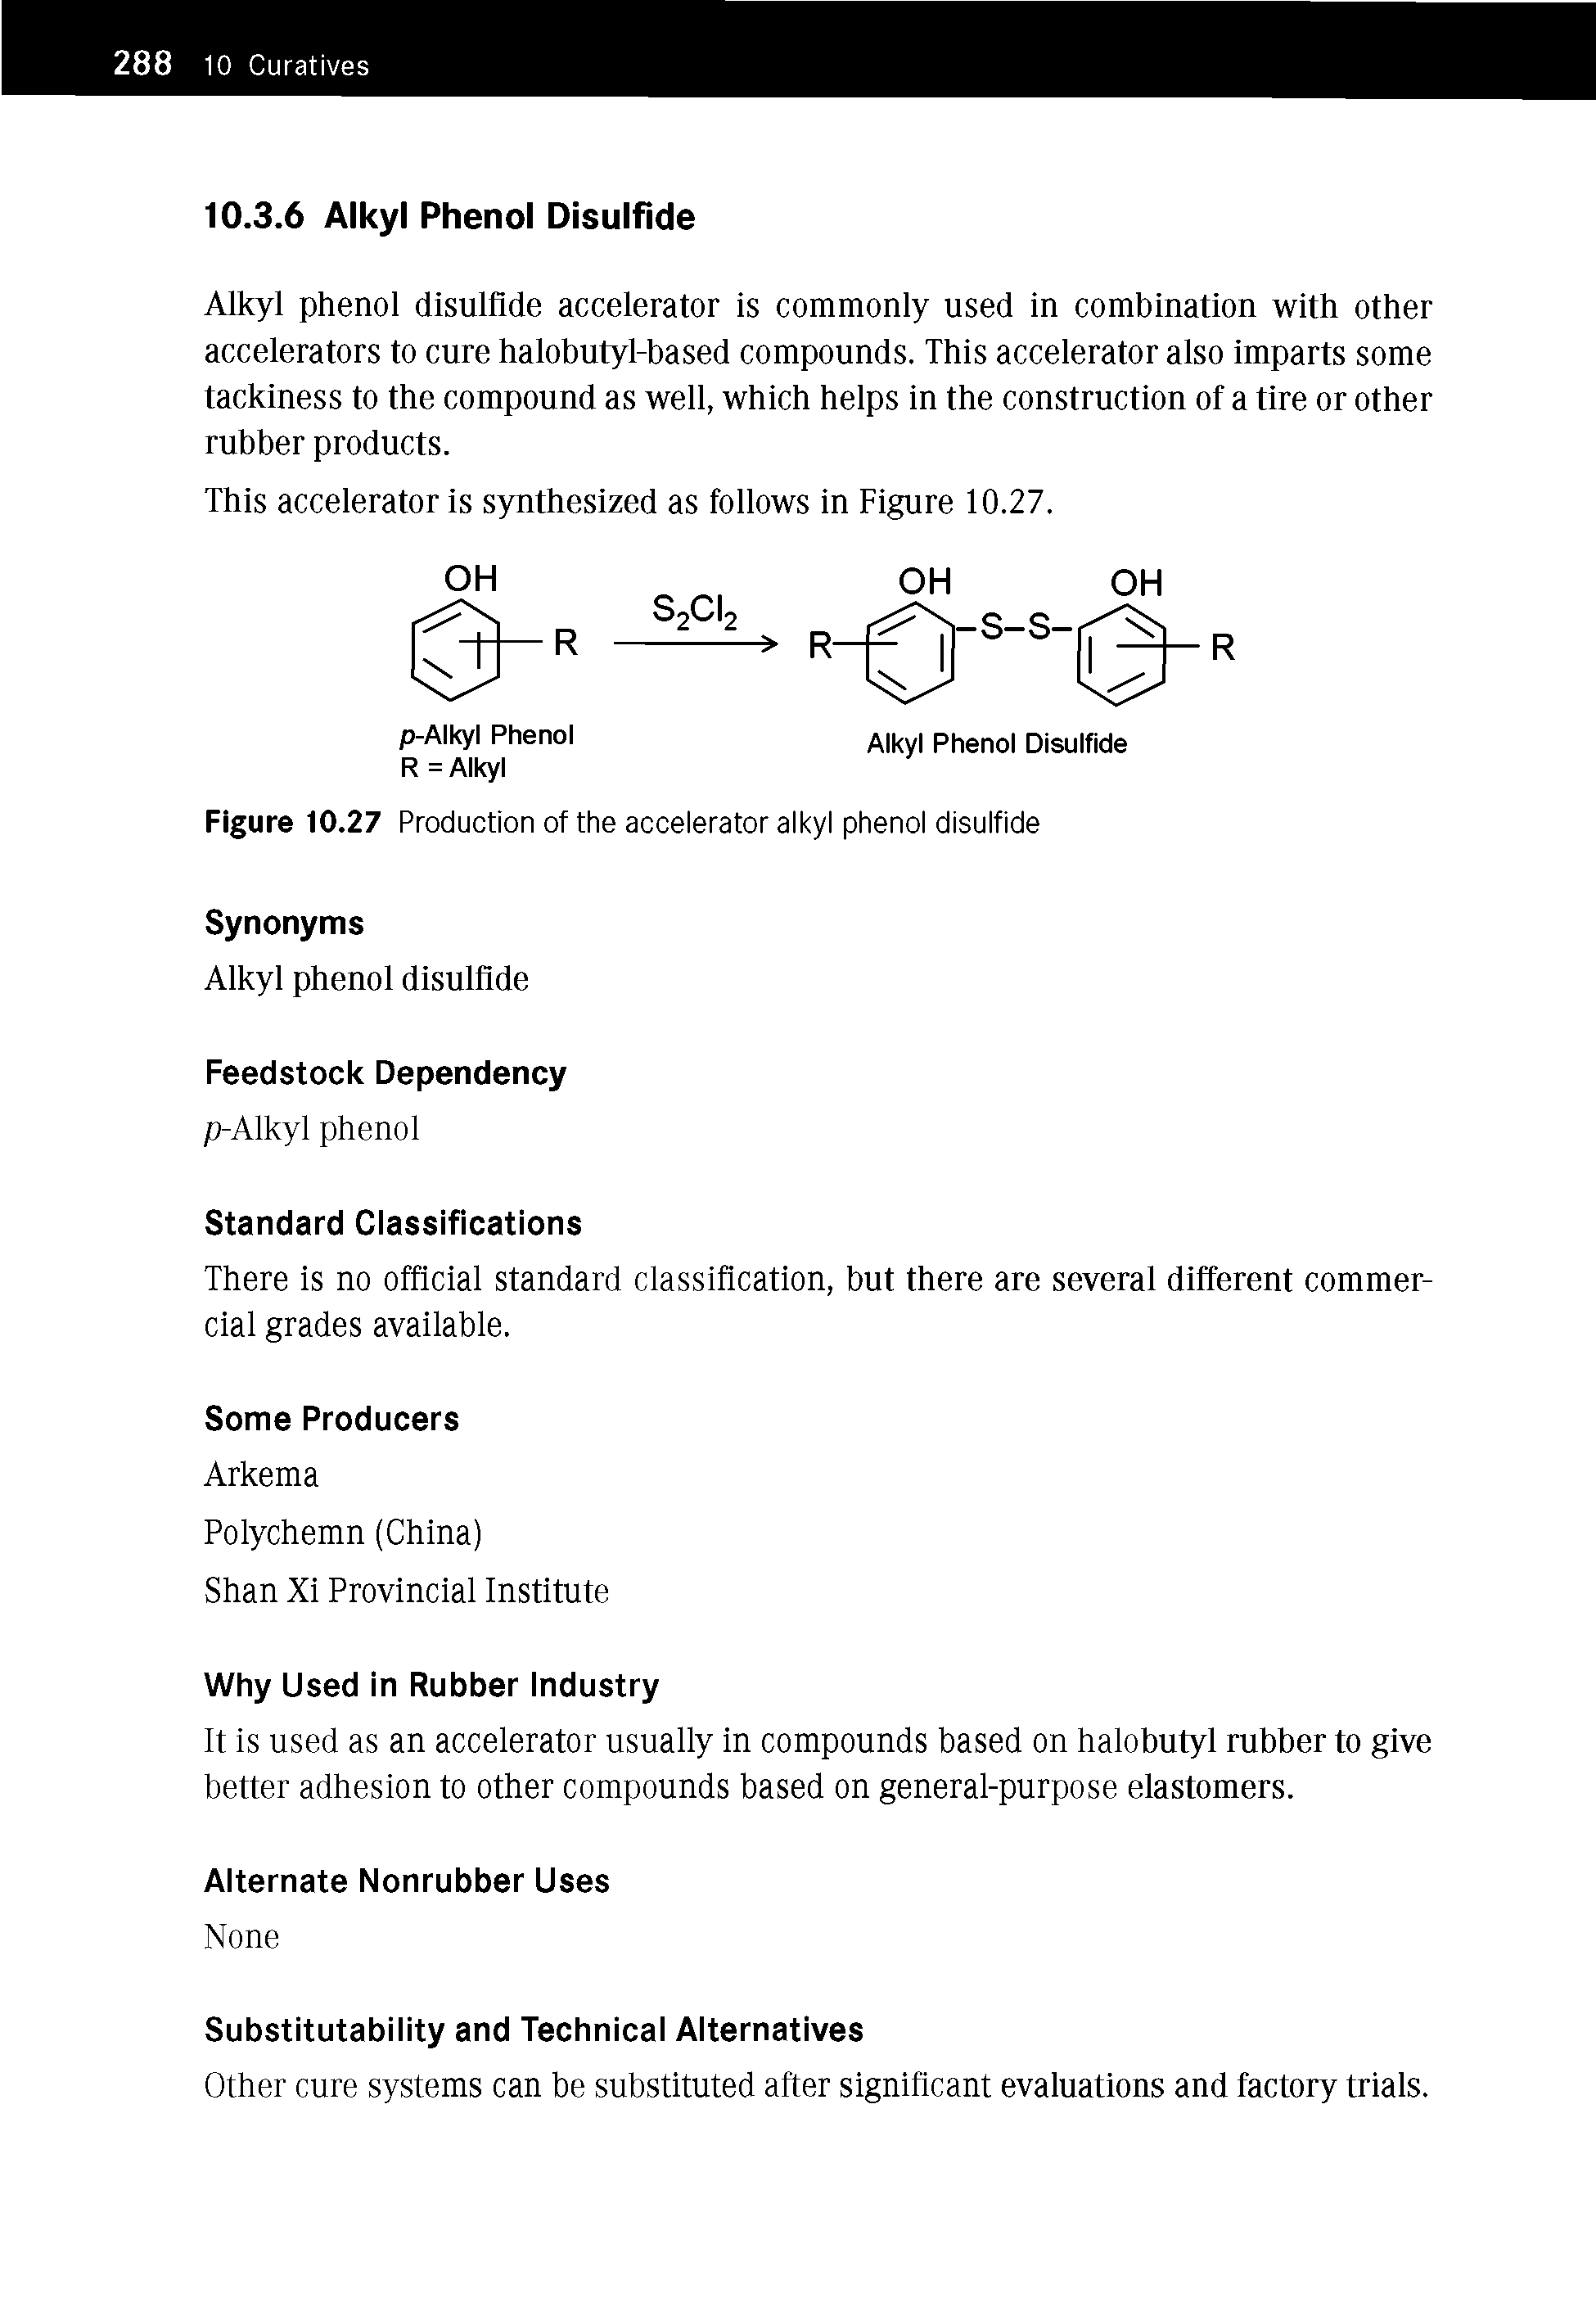 Figure 10.27 Production of the accelerator alkyl phenol disulfide...